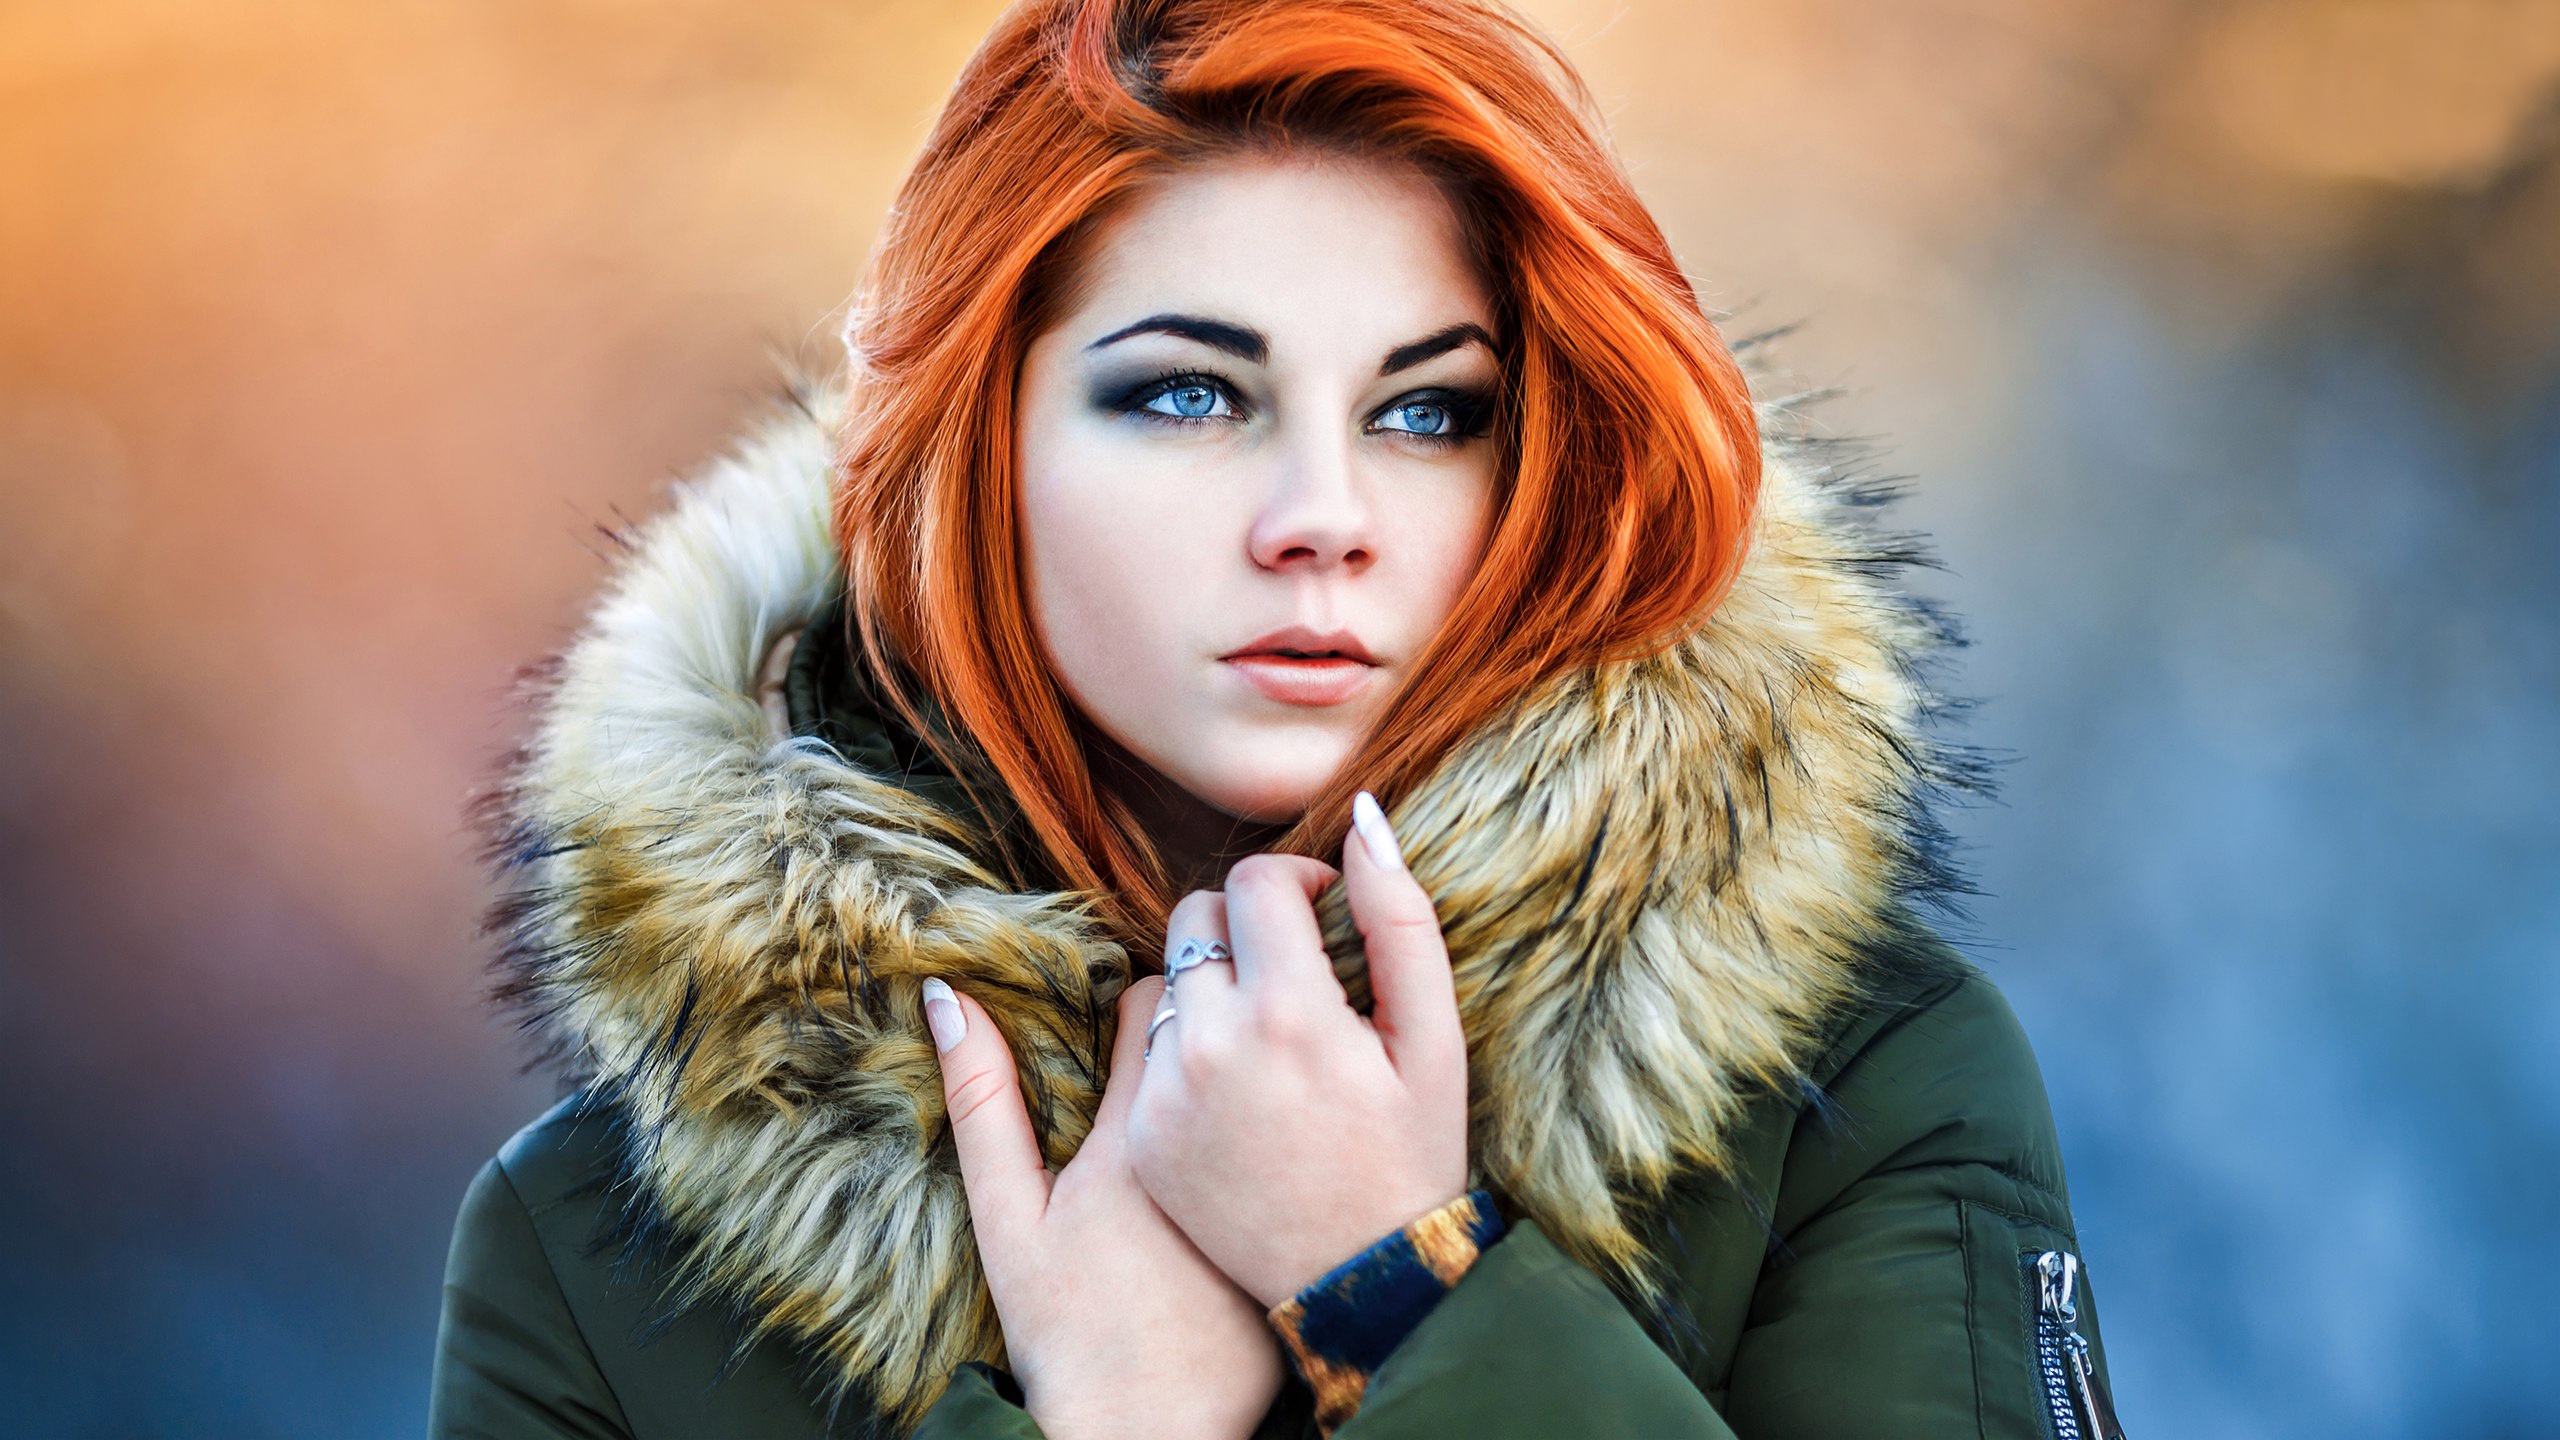 Download Face Blue Eyes Redhead Woman Model Hd Wallpaper 5261